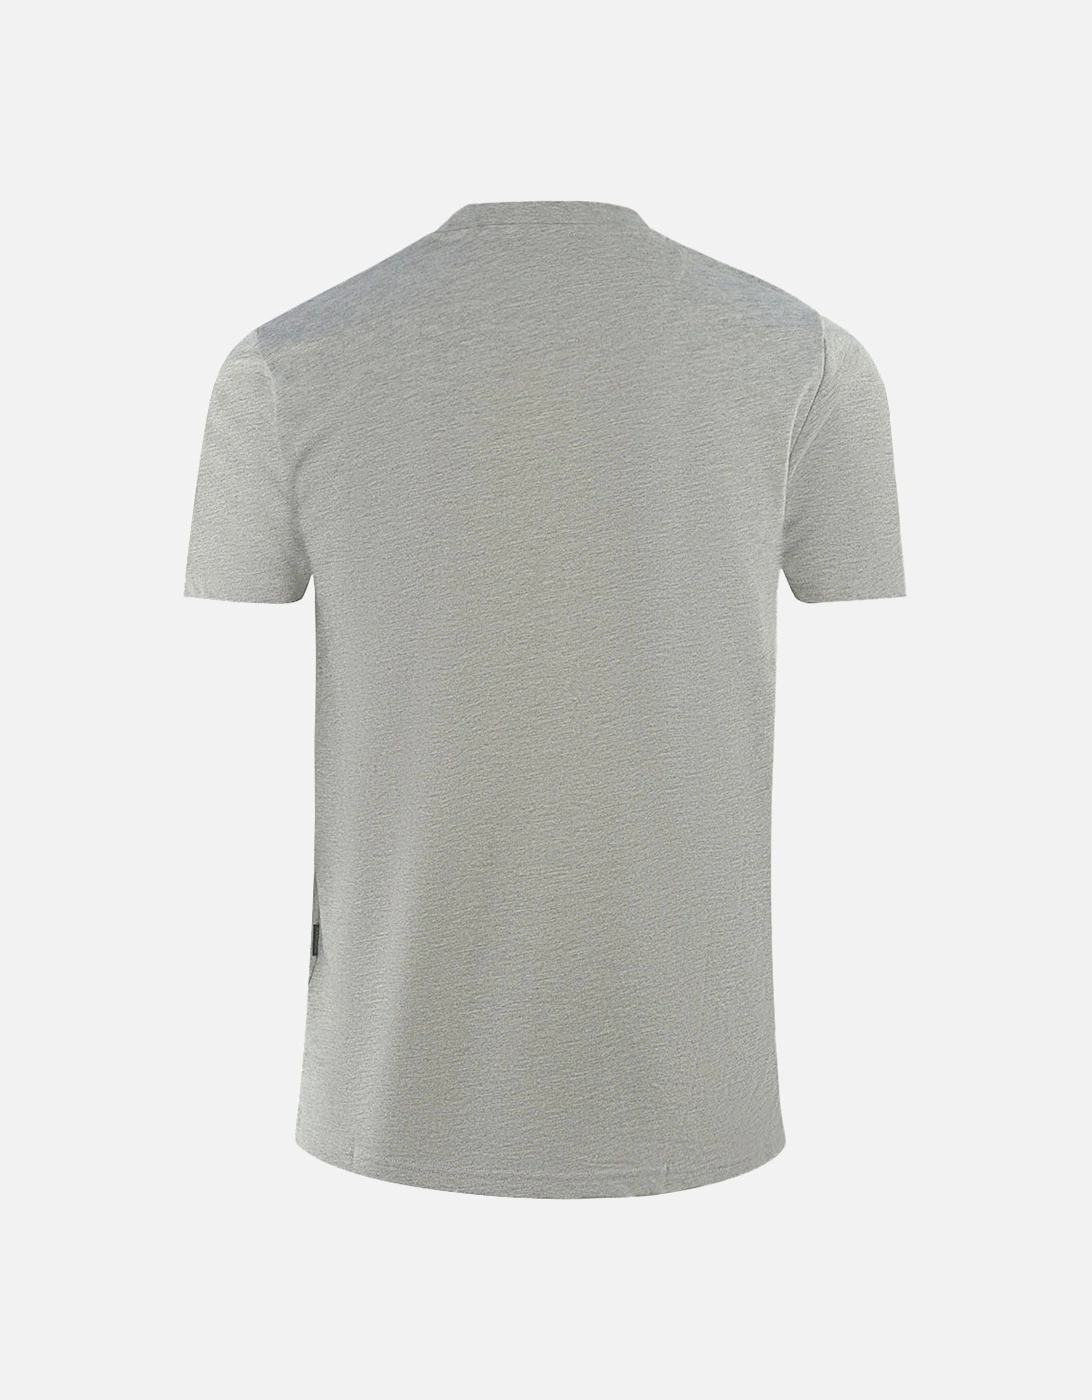 London 1851 Grey T-Shirt